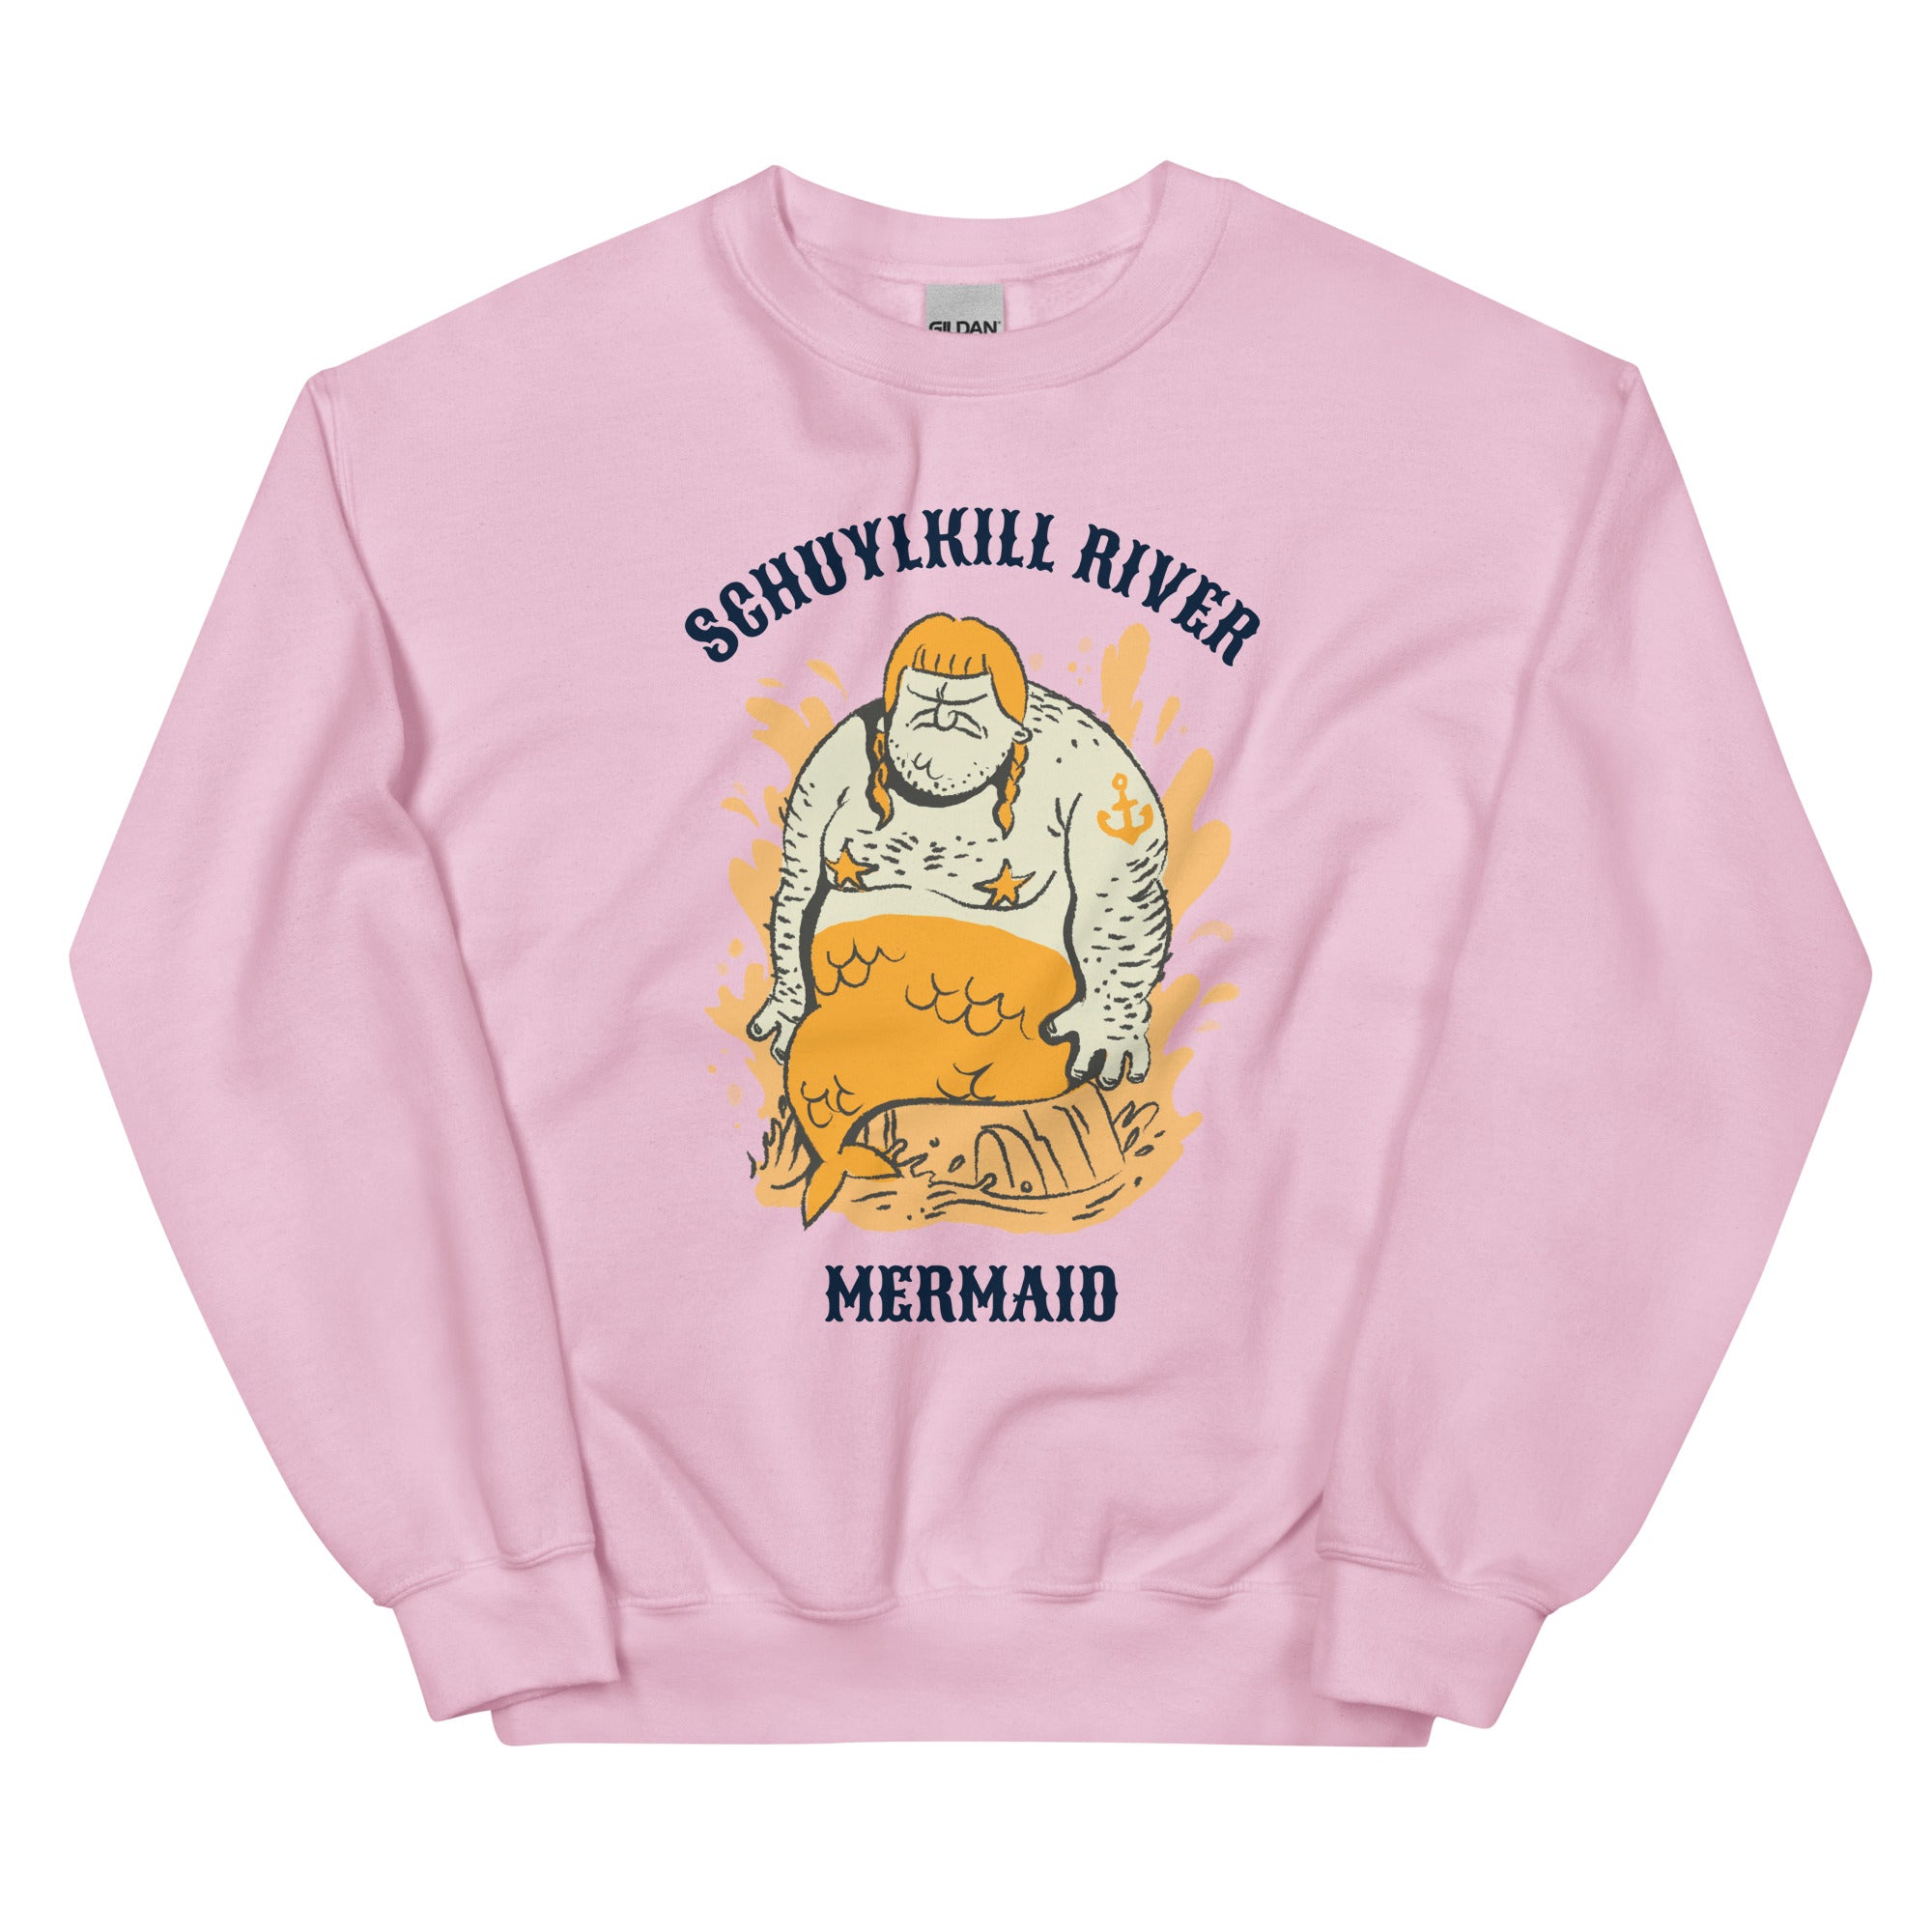 Funny Philadelphia Schuylkill River Mermaid pink sweatshirt from Phillygoat